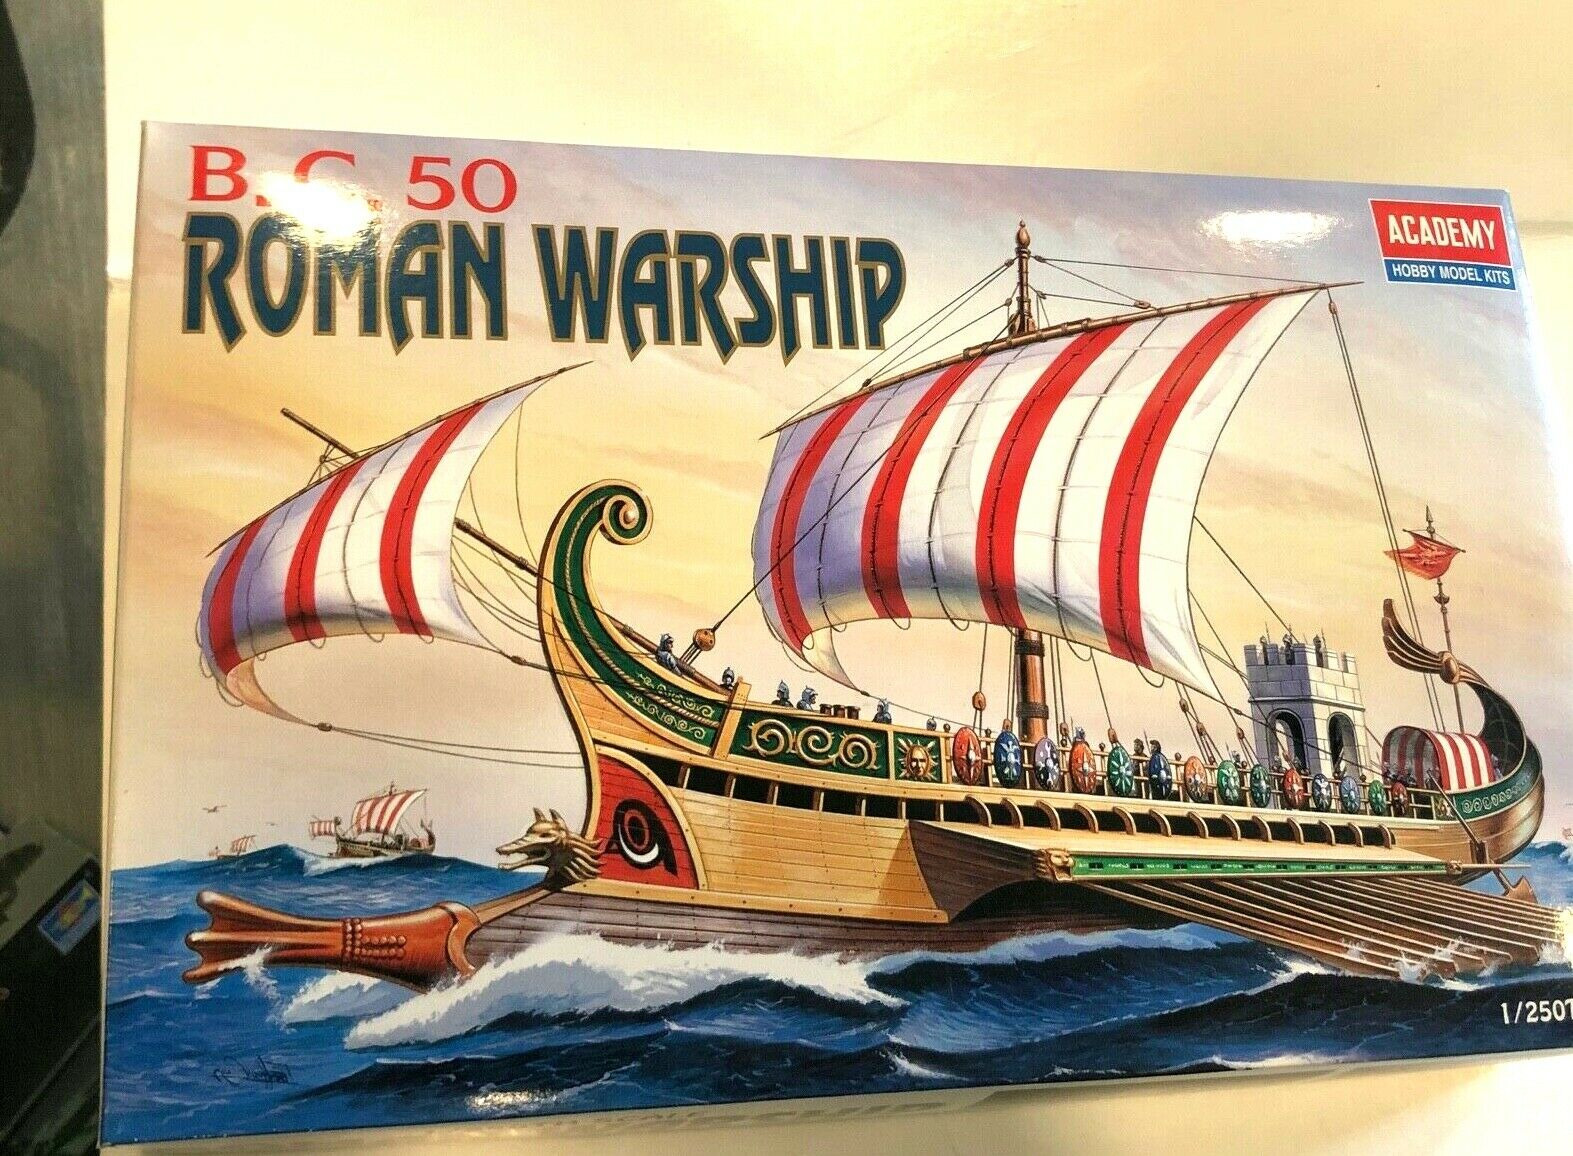 1985 Academy B.c. 50 Roman Warship, 1:250, Kit 1401, New In The Box